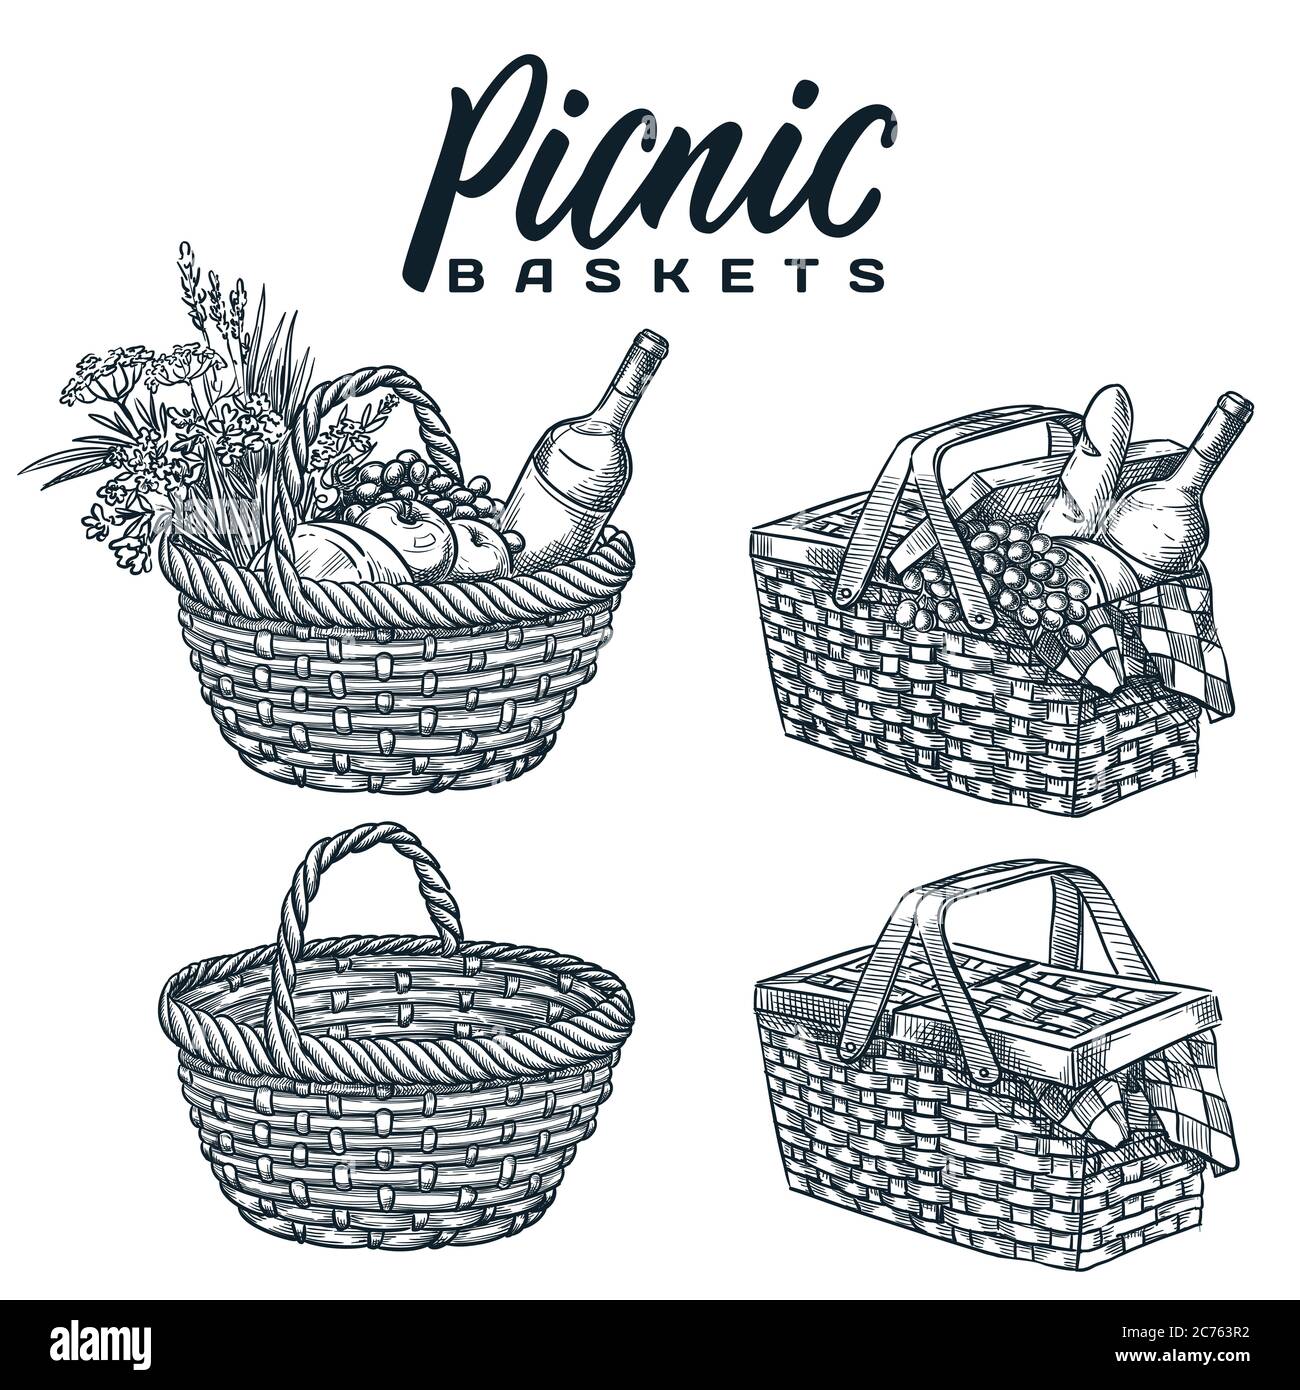 Picnic hamper food Stock Vector Images - Alamy